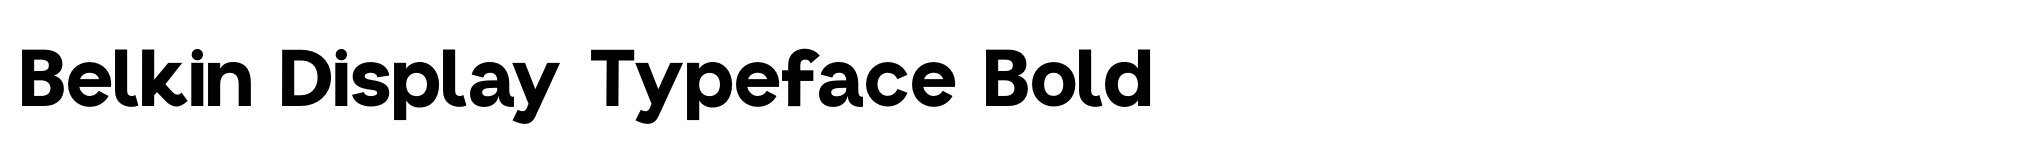 Belkin Display Typeface Bold image